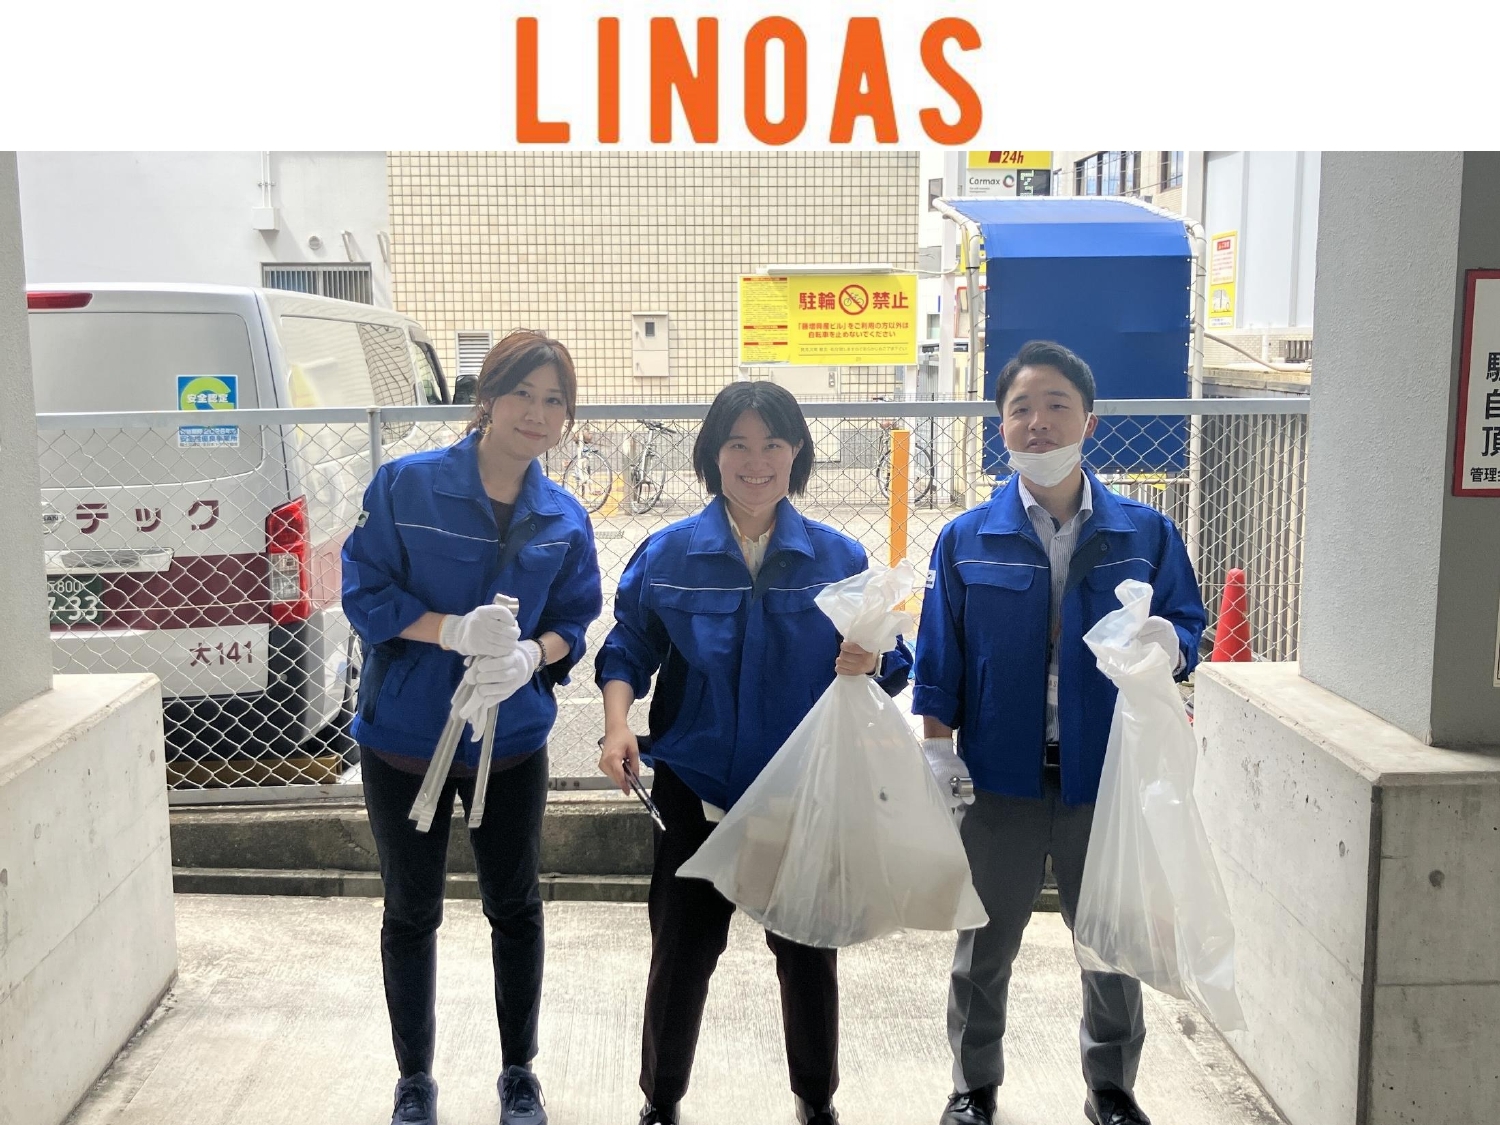  LINOASの清掃画像です。